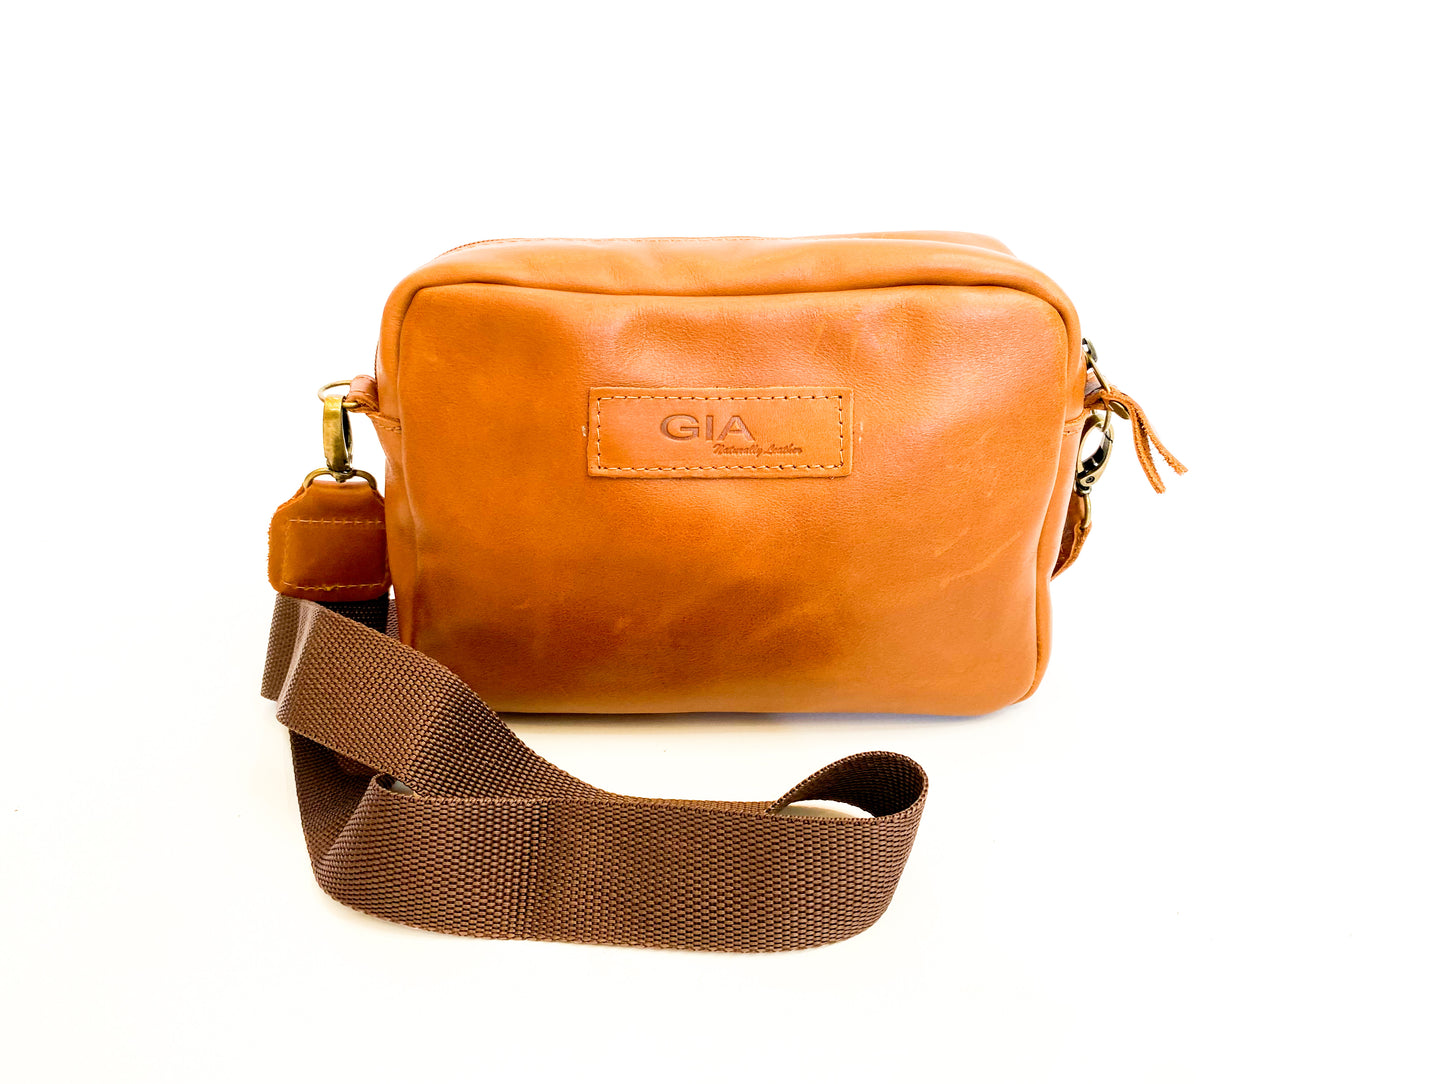 Gia leather tan camera crossbody bag